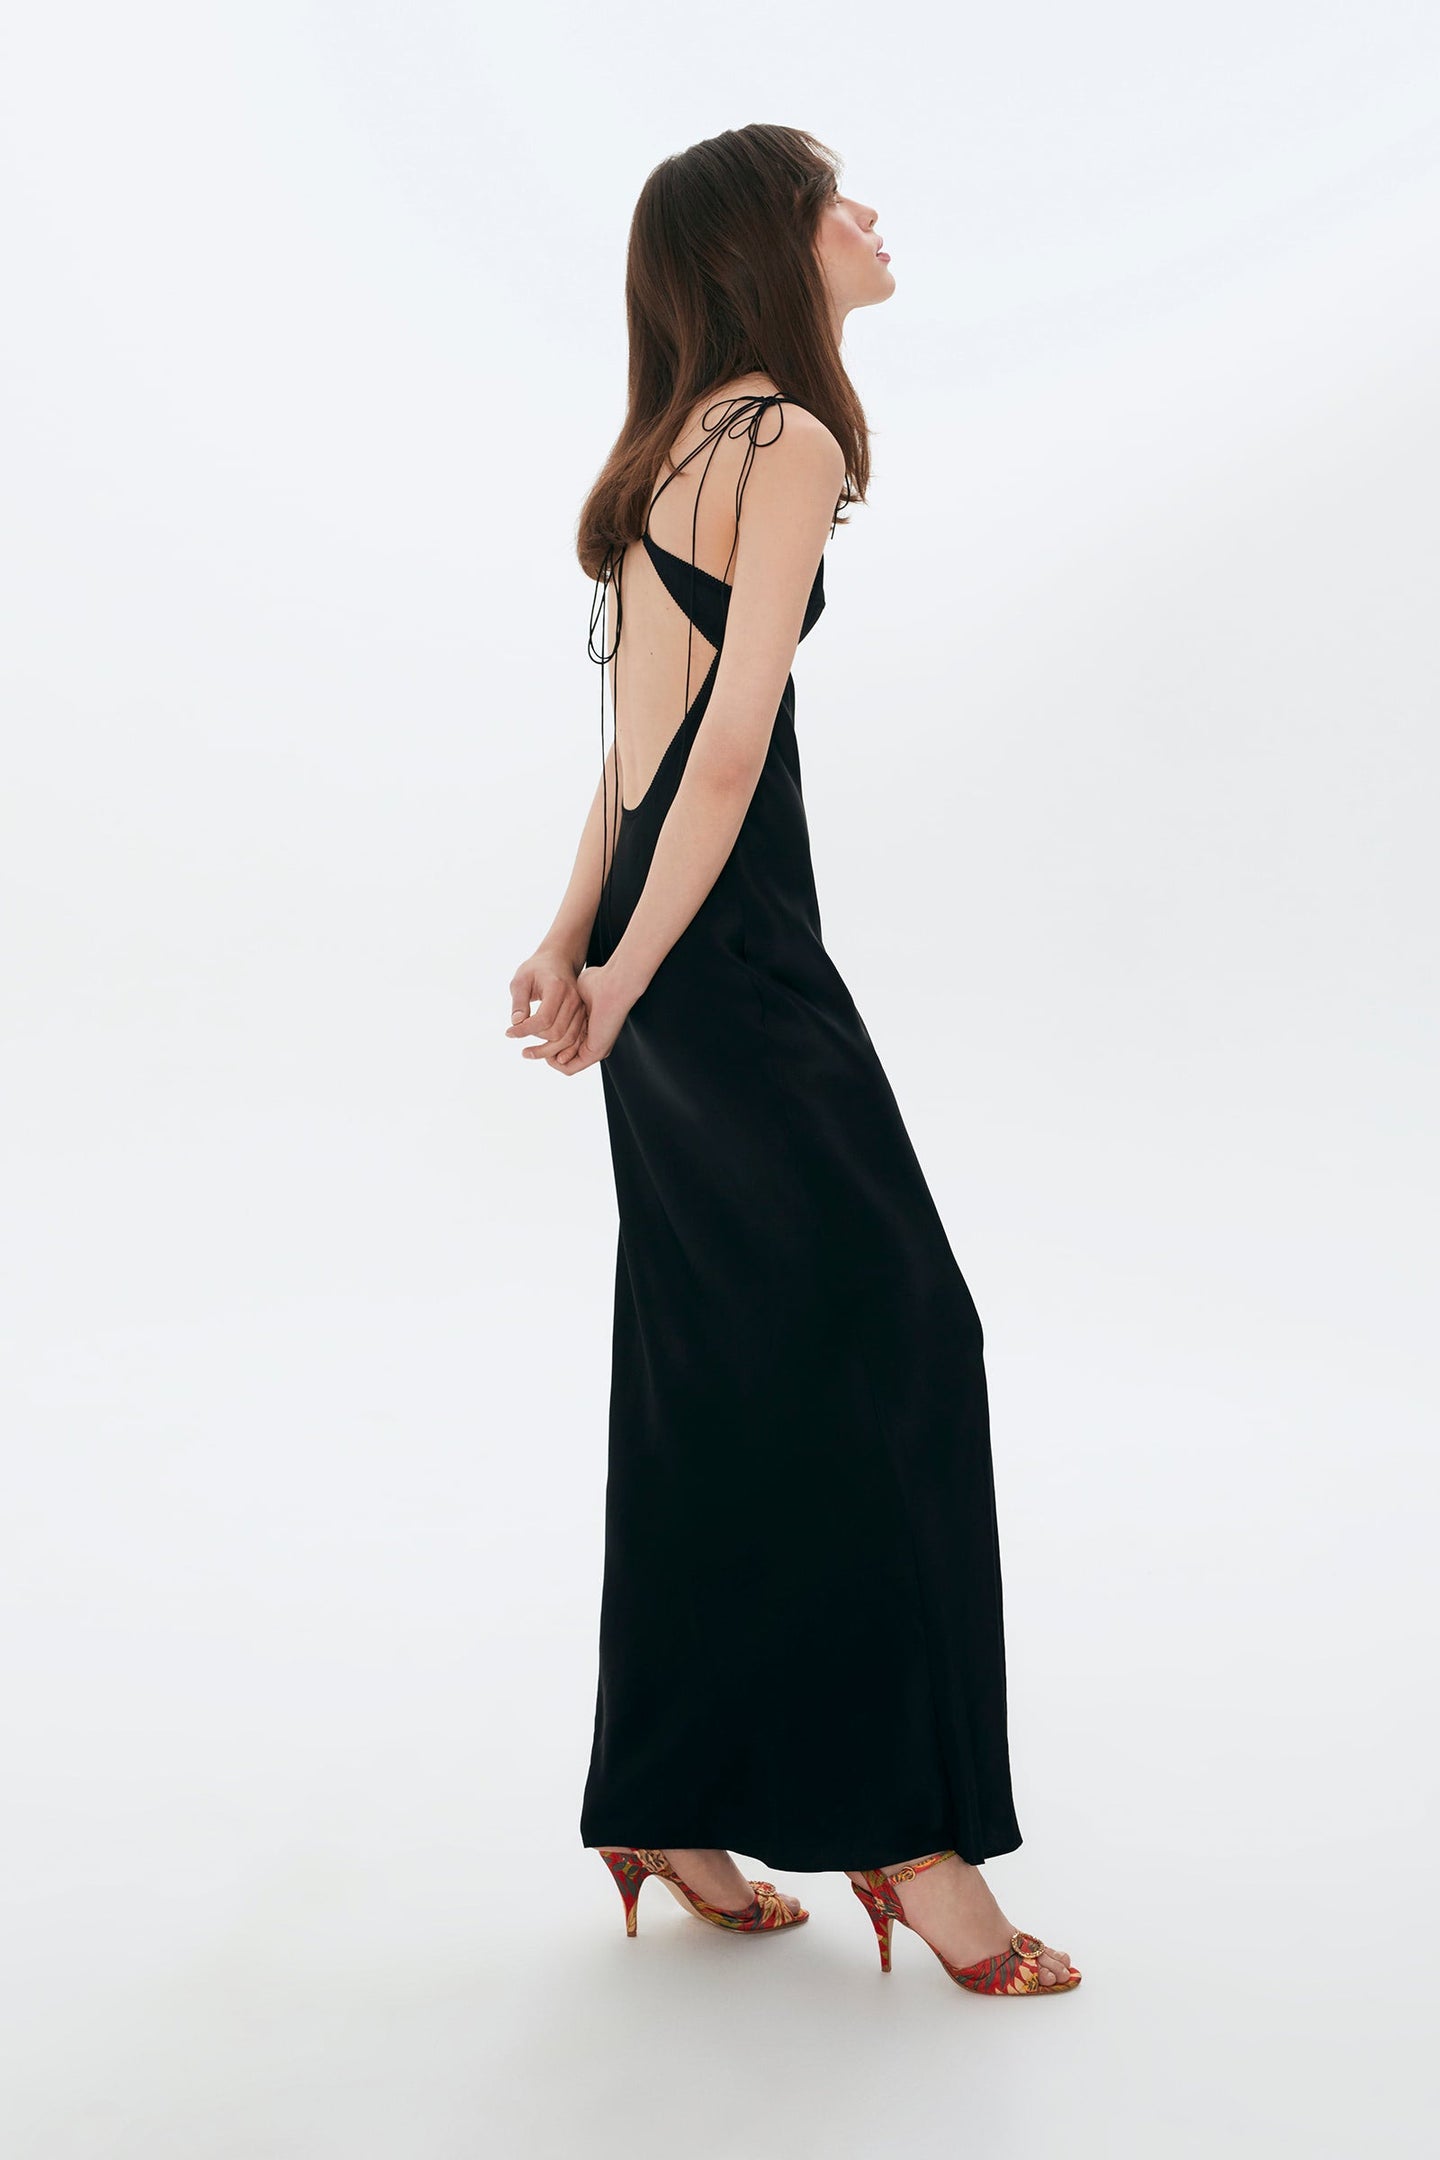 Model in black Paris dress